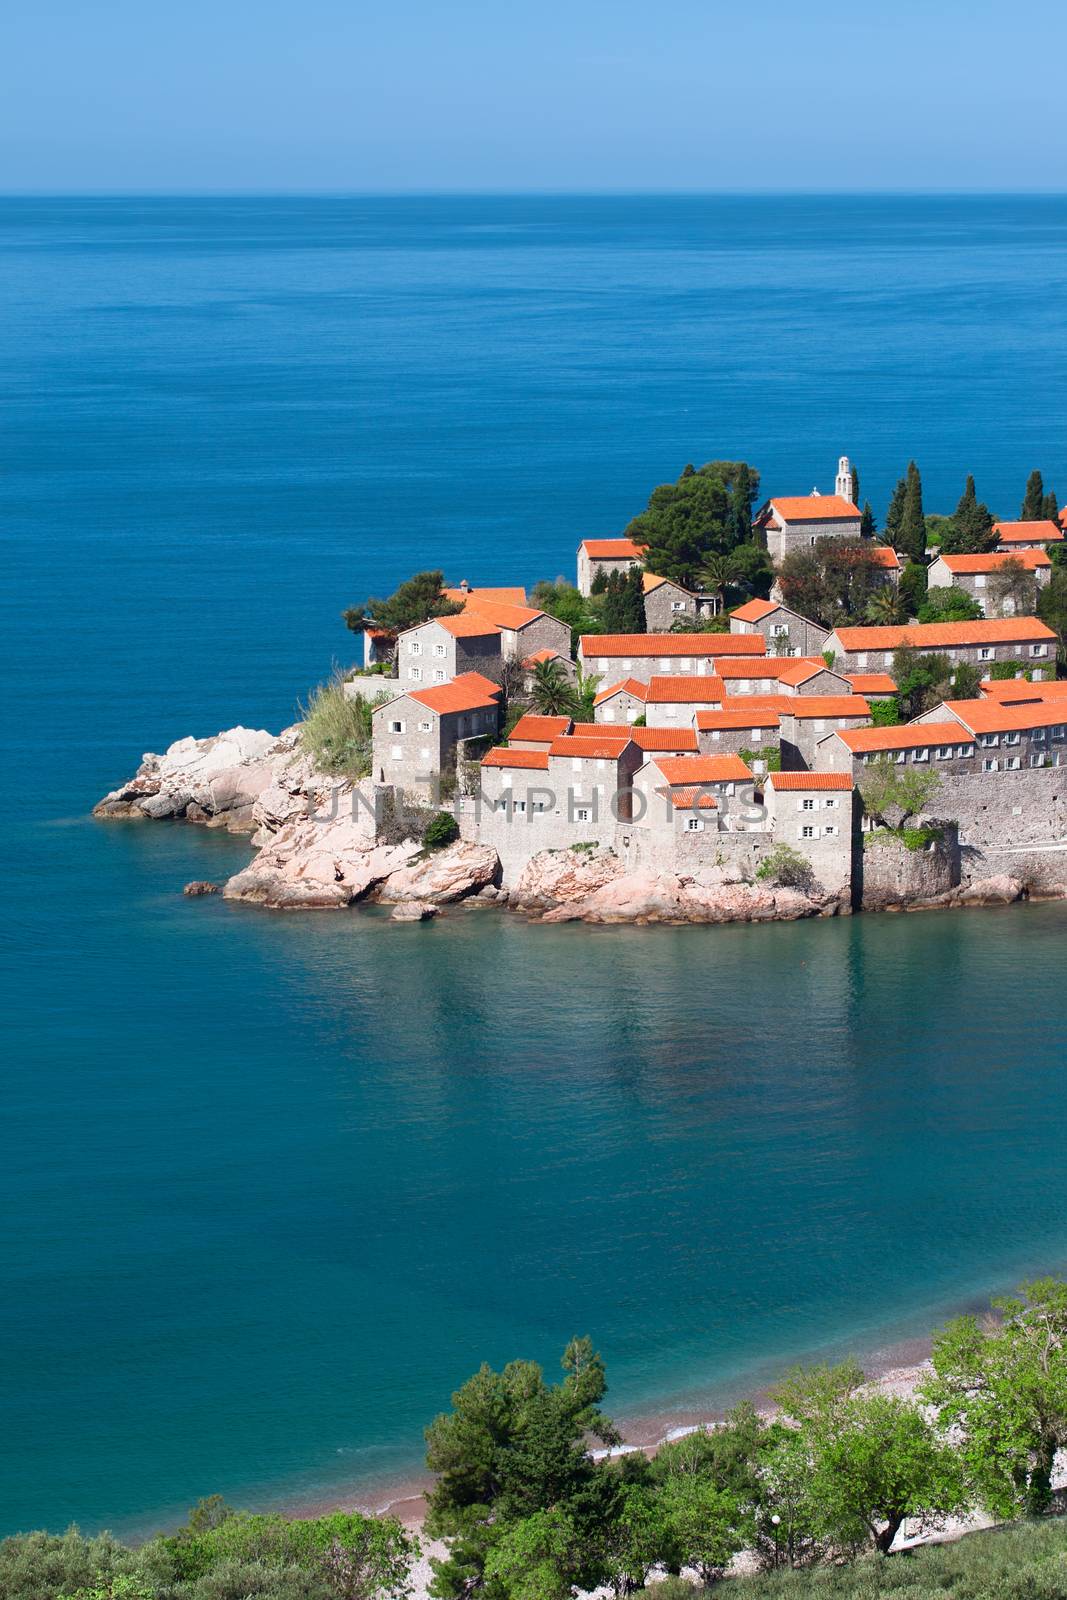 Sveti Stefan resort island in Montenegro by Garsya